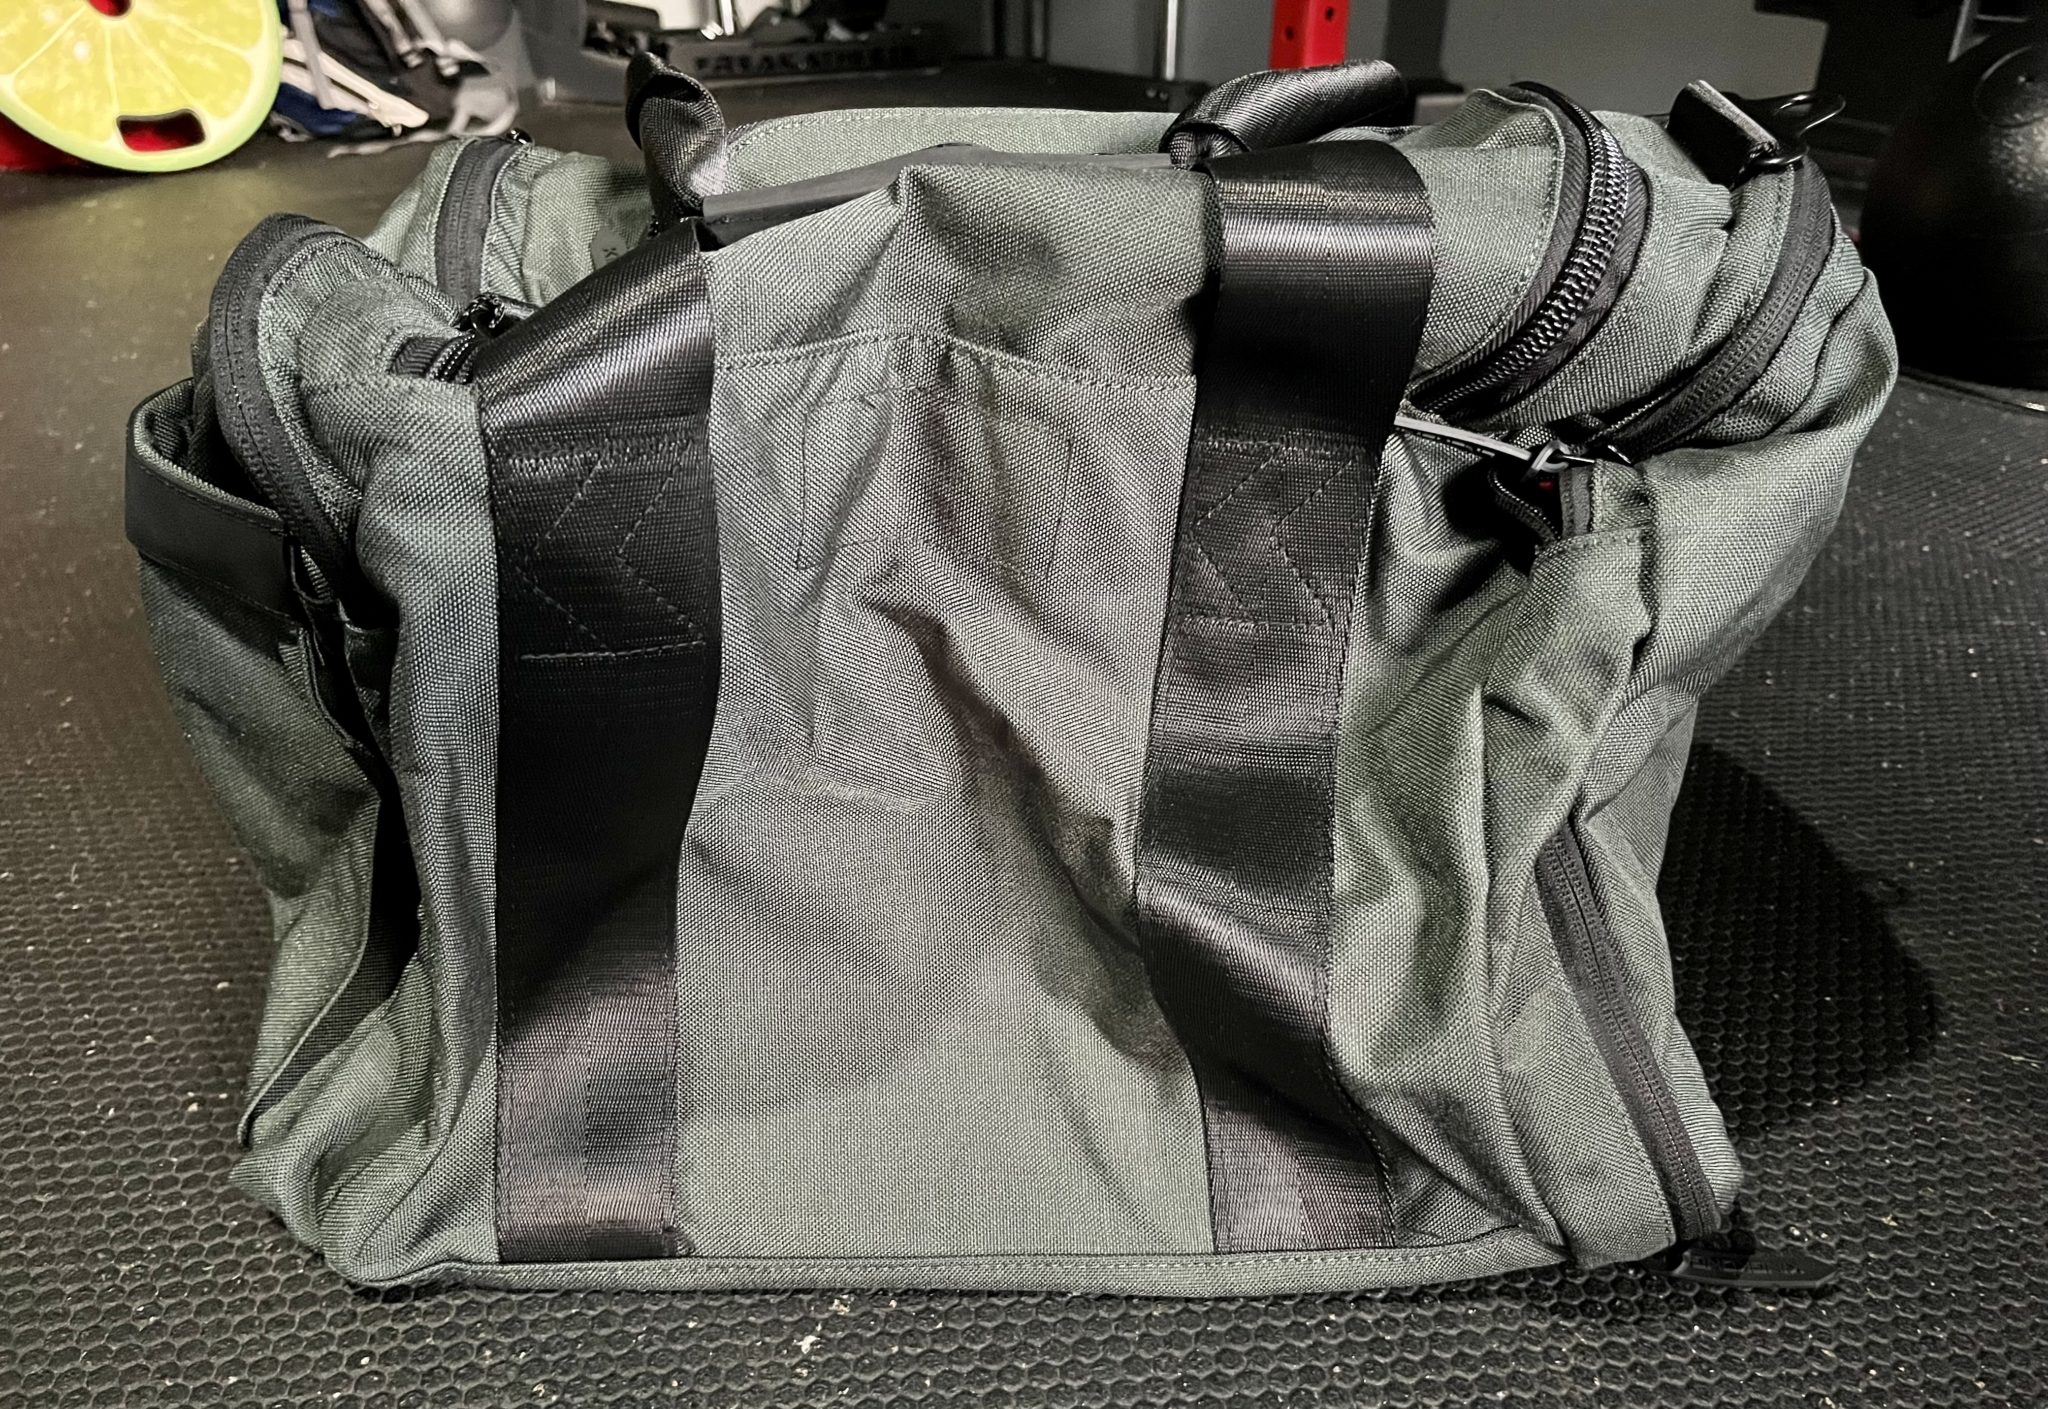 King Kong Duffle Bag Review - Plus33 JNR Gym Duffel Bag